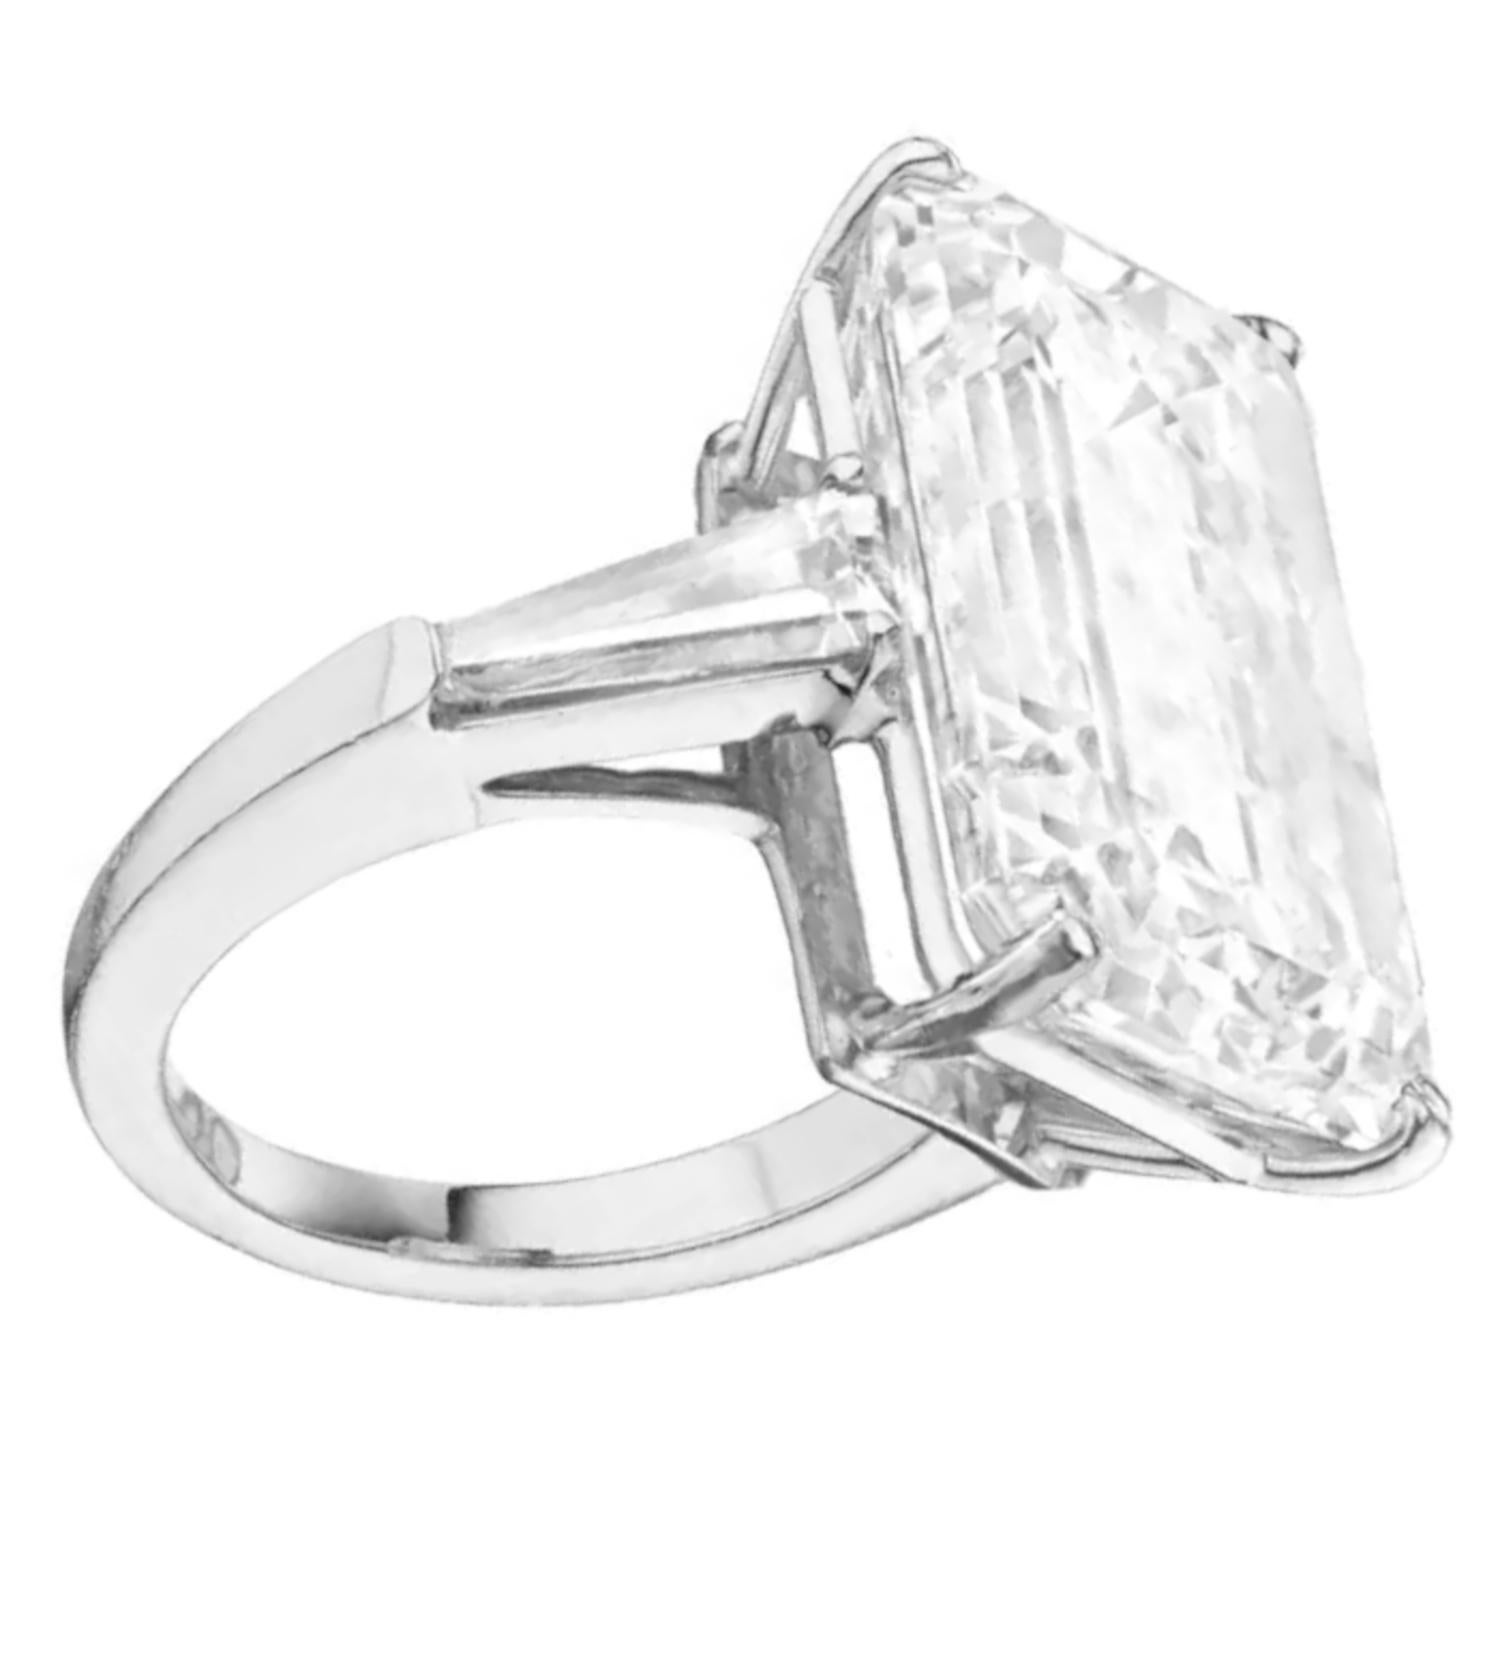 8 carat diamond ring